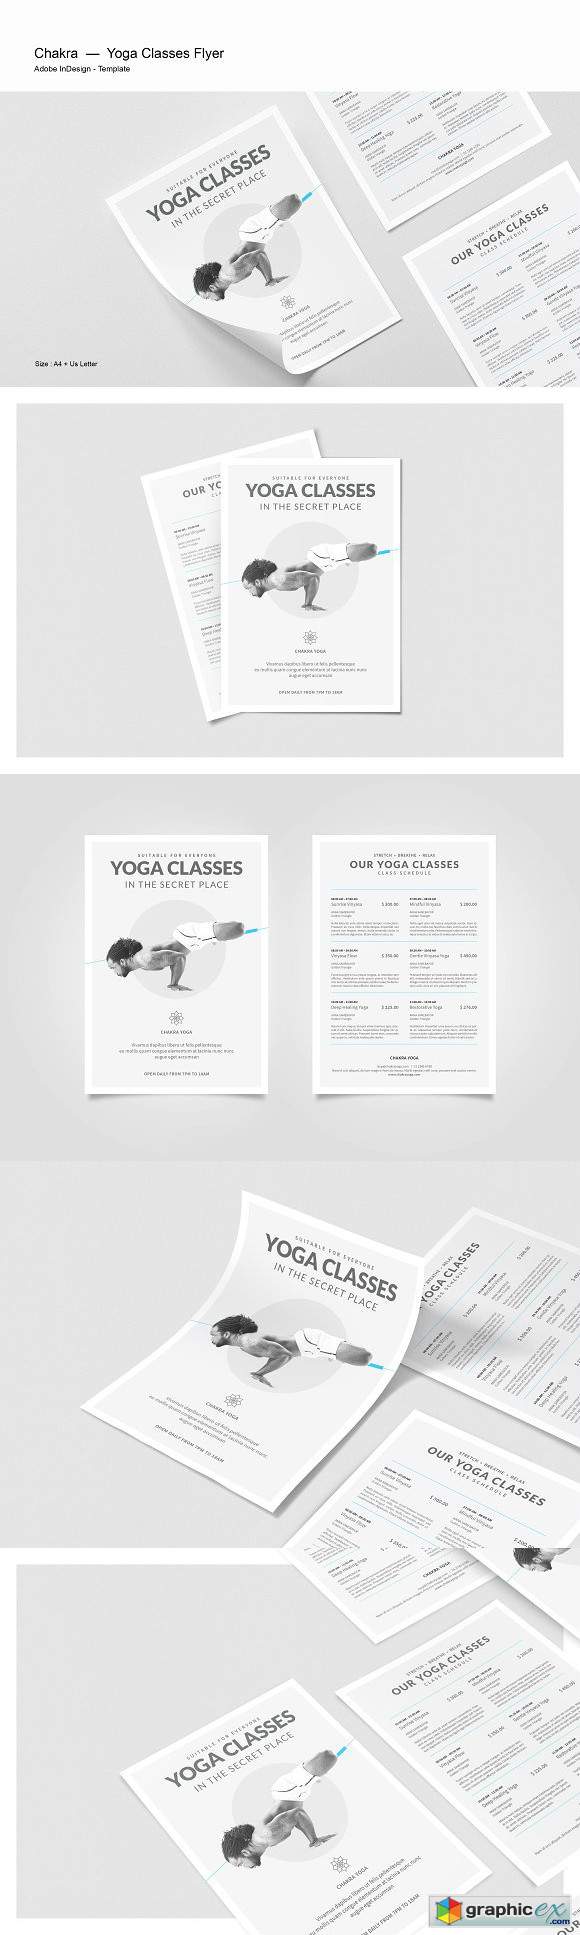 Yoga Classes Flyer